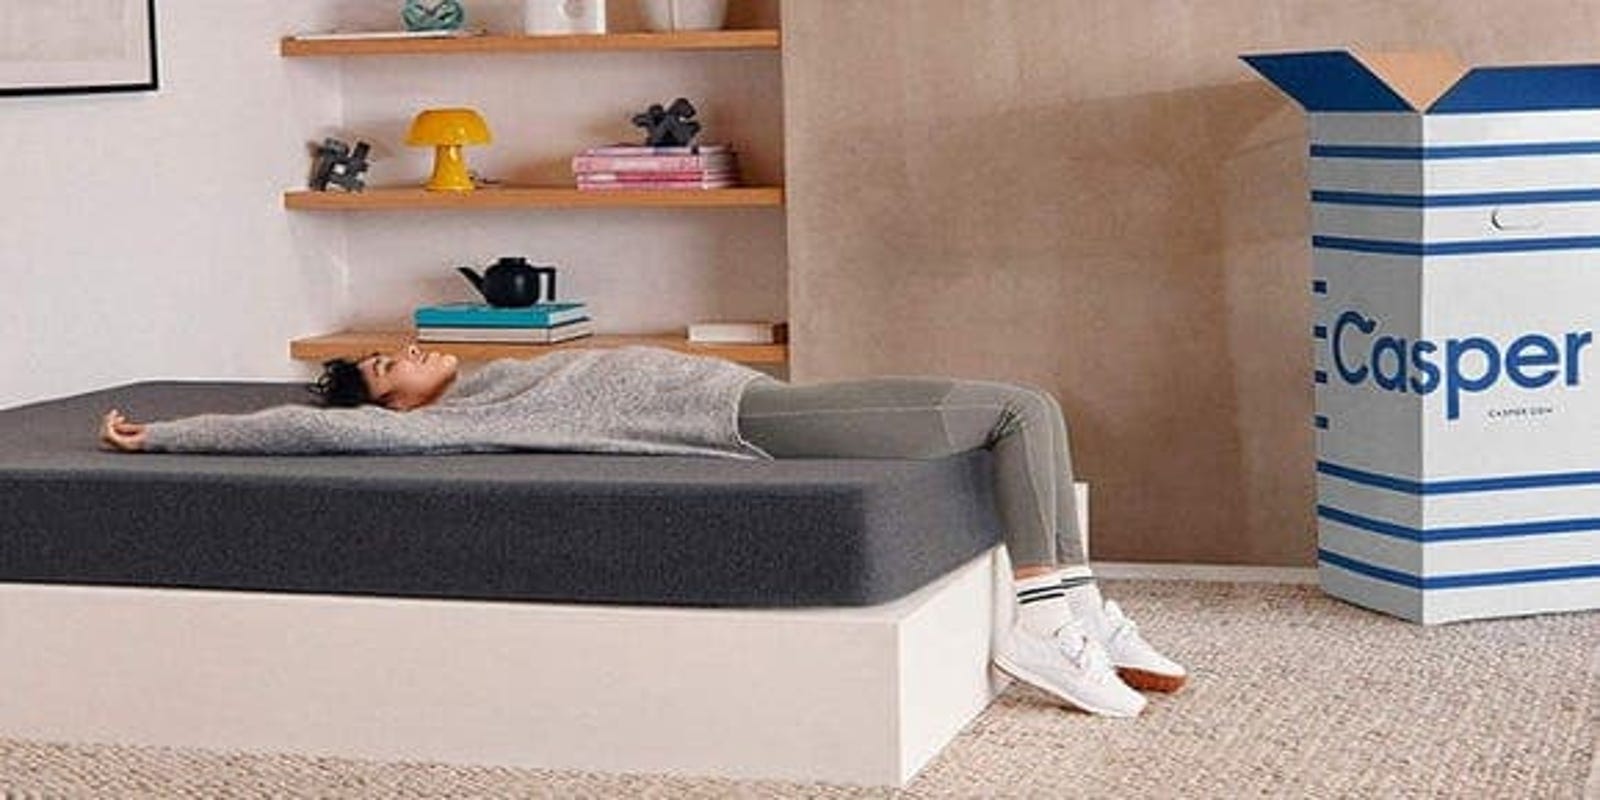 casper mattress july 4 sale